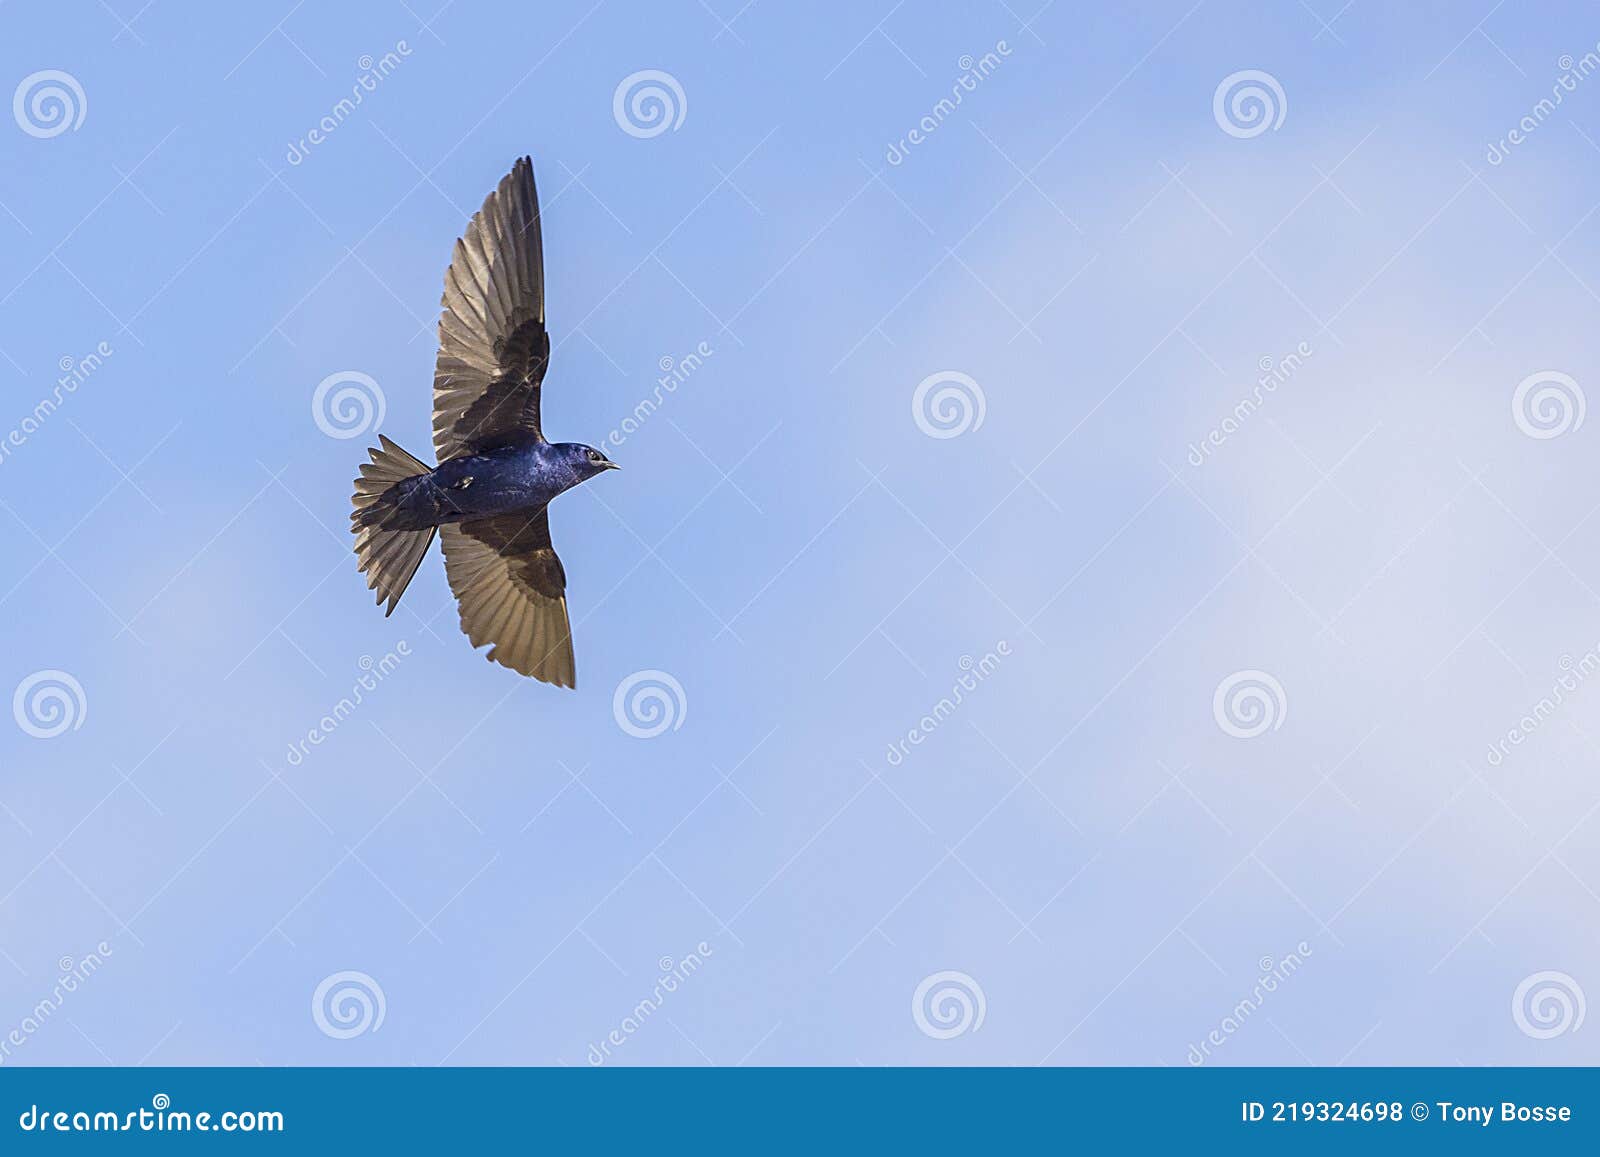 purple martin swallow in flight with wingspan